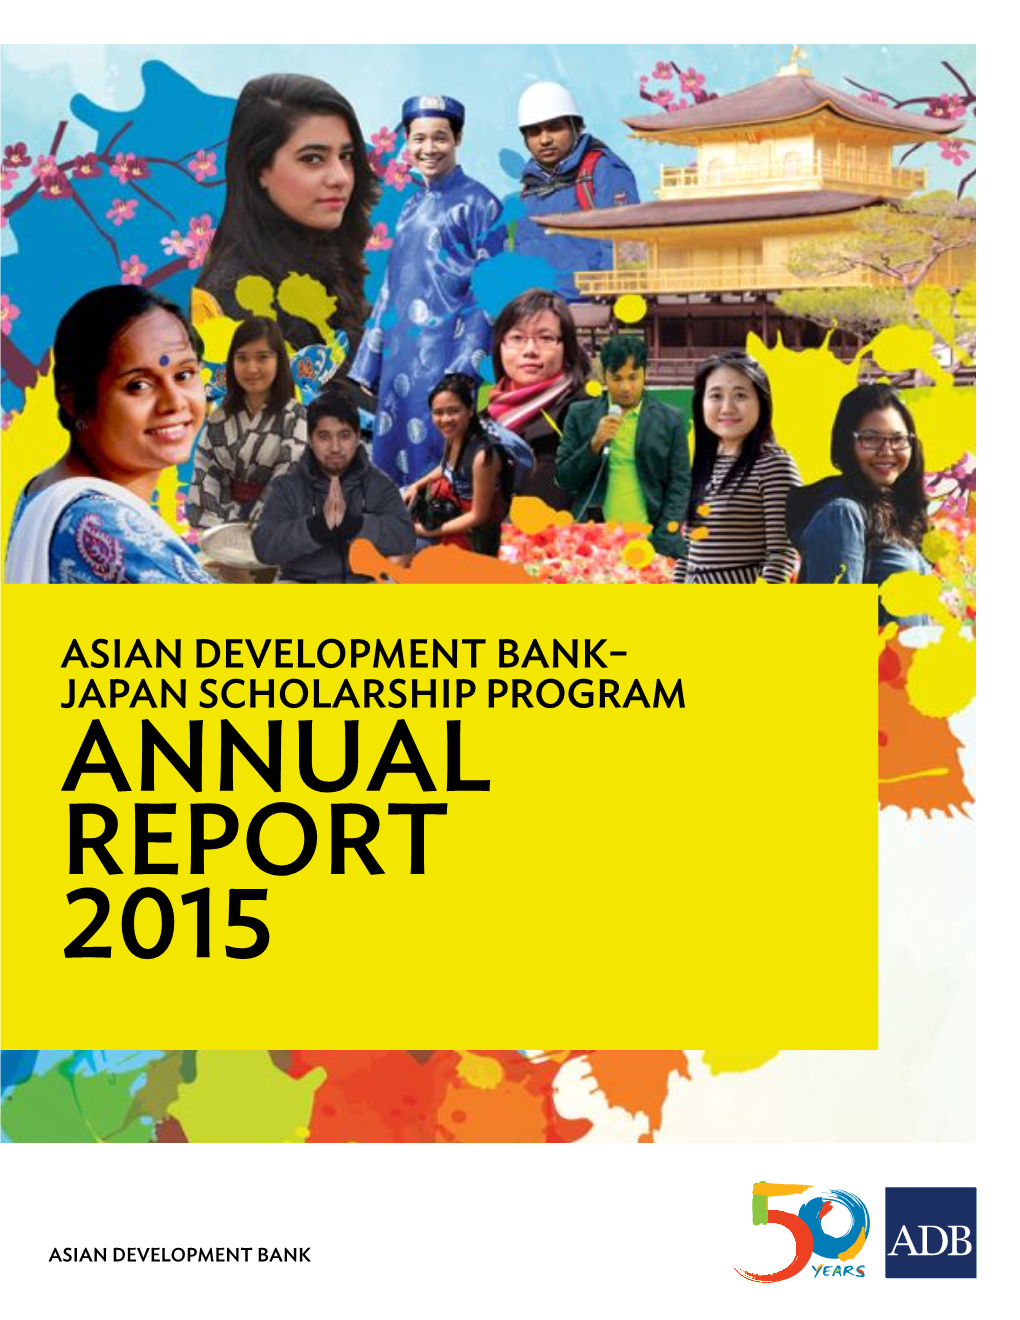 Asian Development Bank-Japan Scholarship Program Annual Report 2015